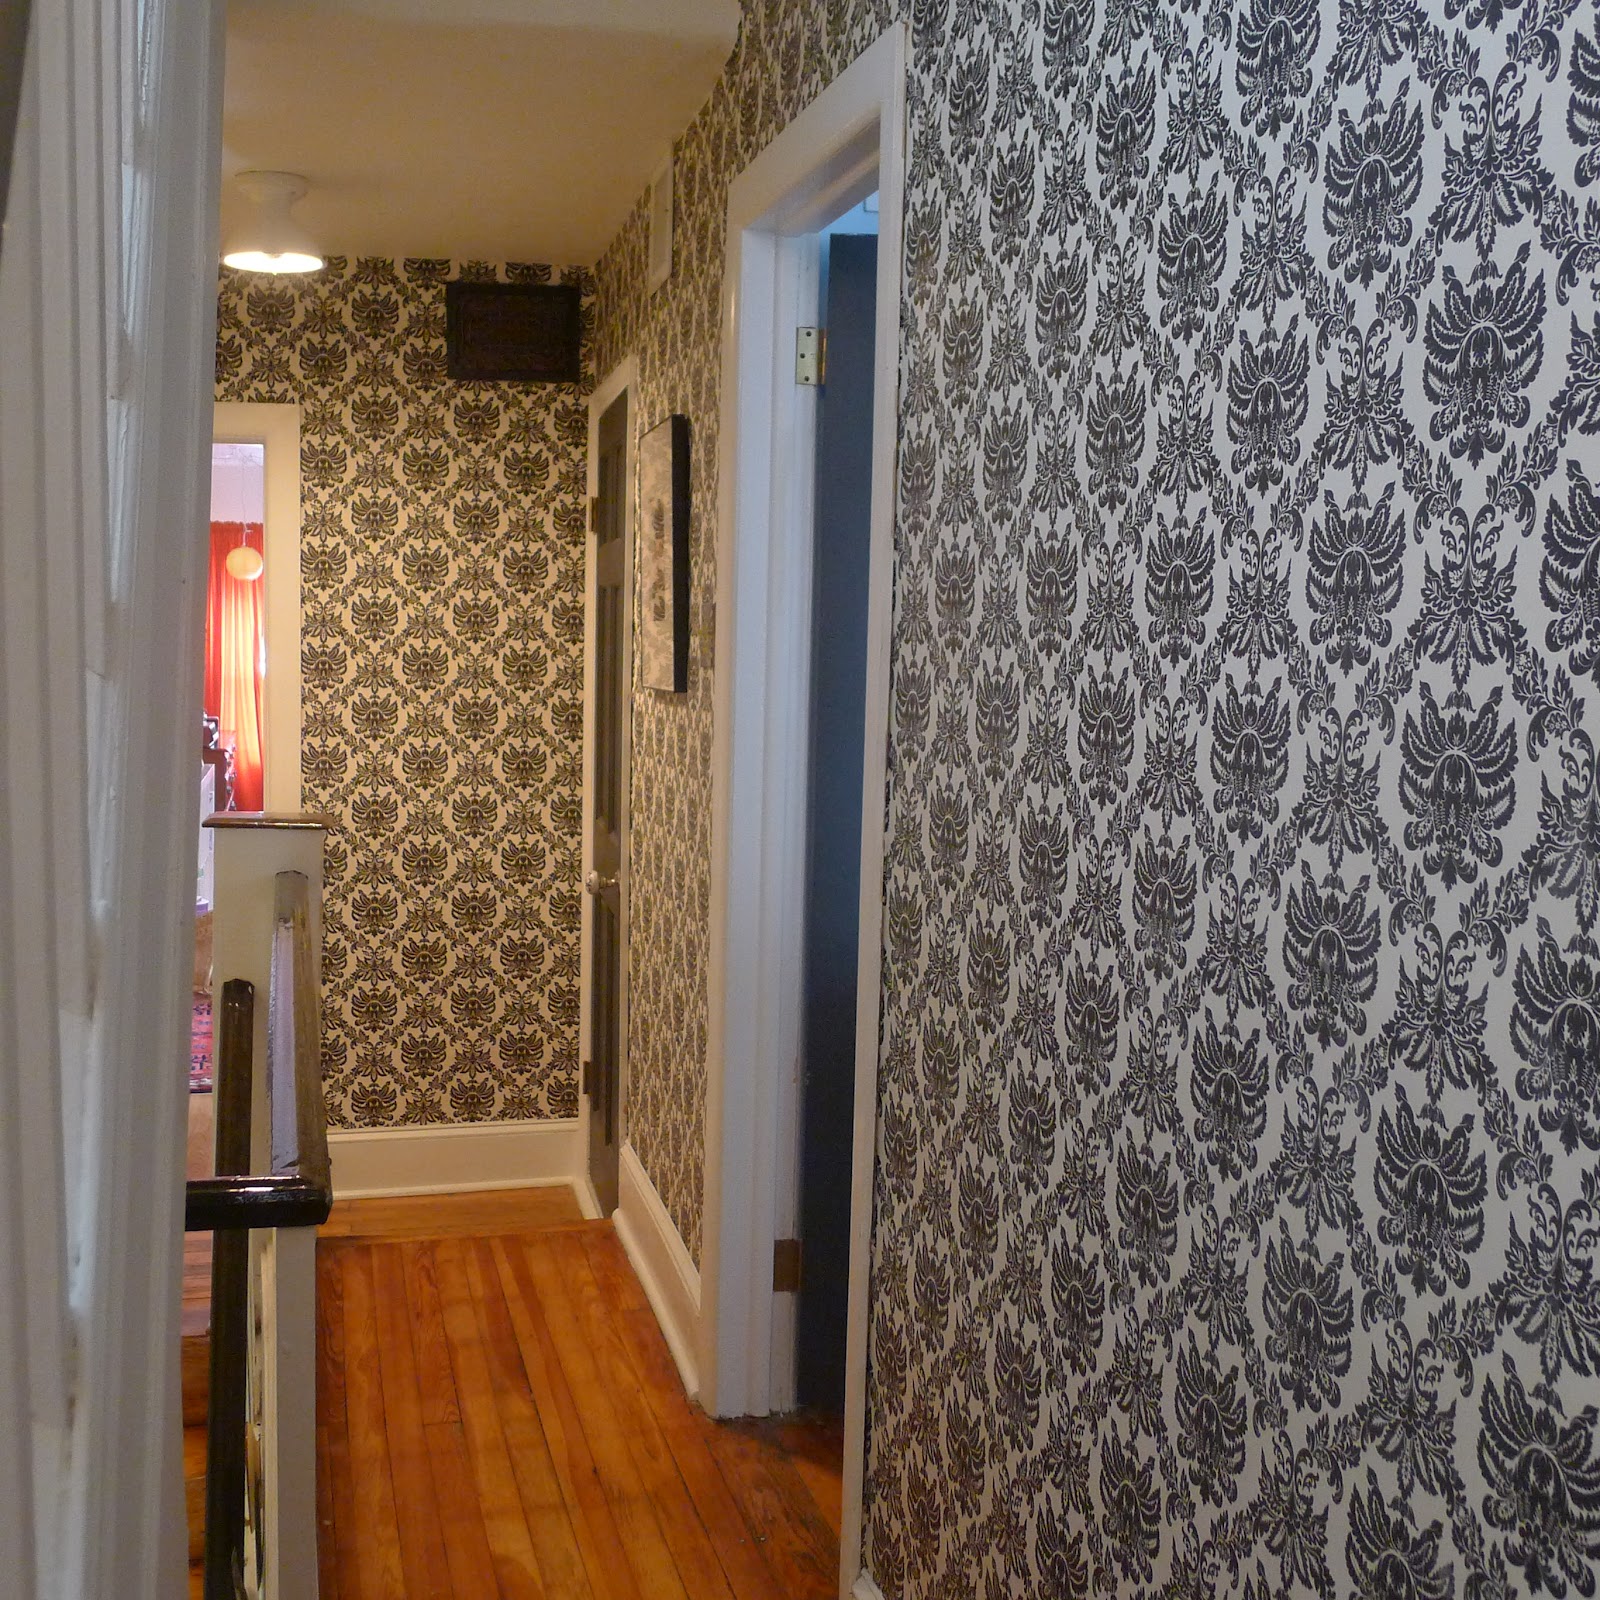 Choosing a dark shade wallpaper for the hallway and corridor